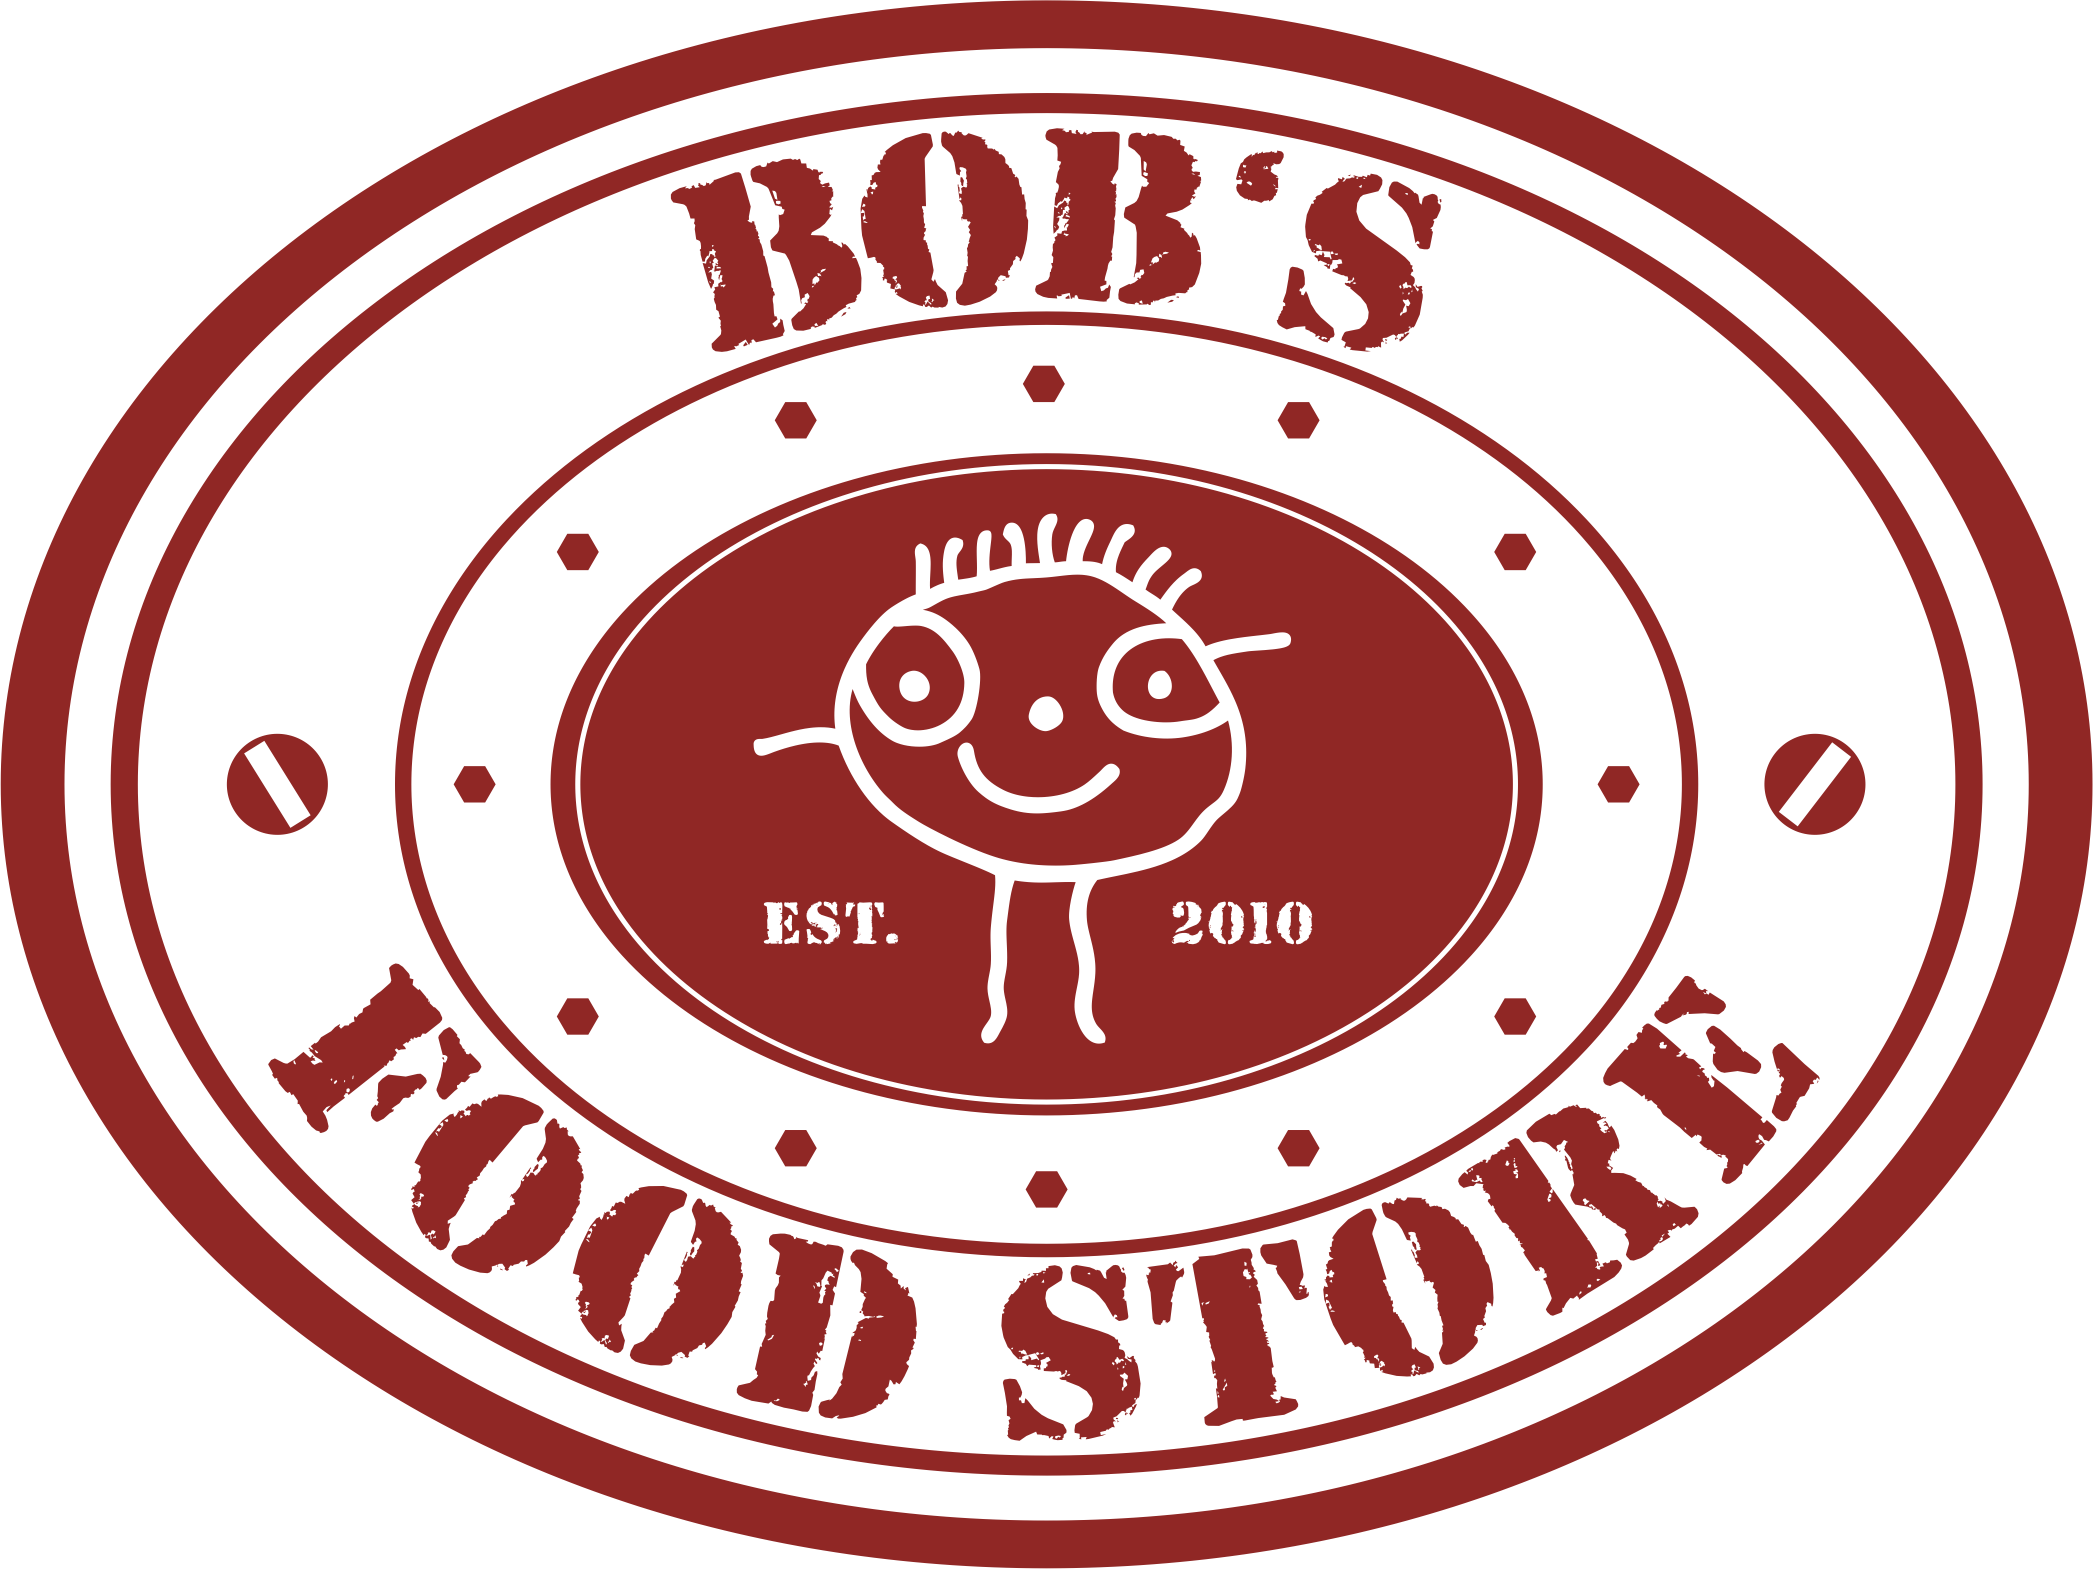 BOB'S FOOD STORE